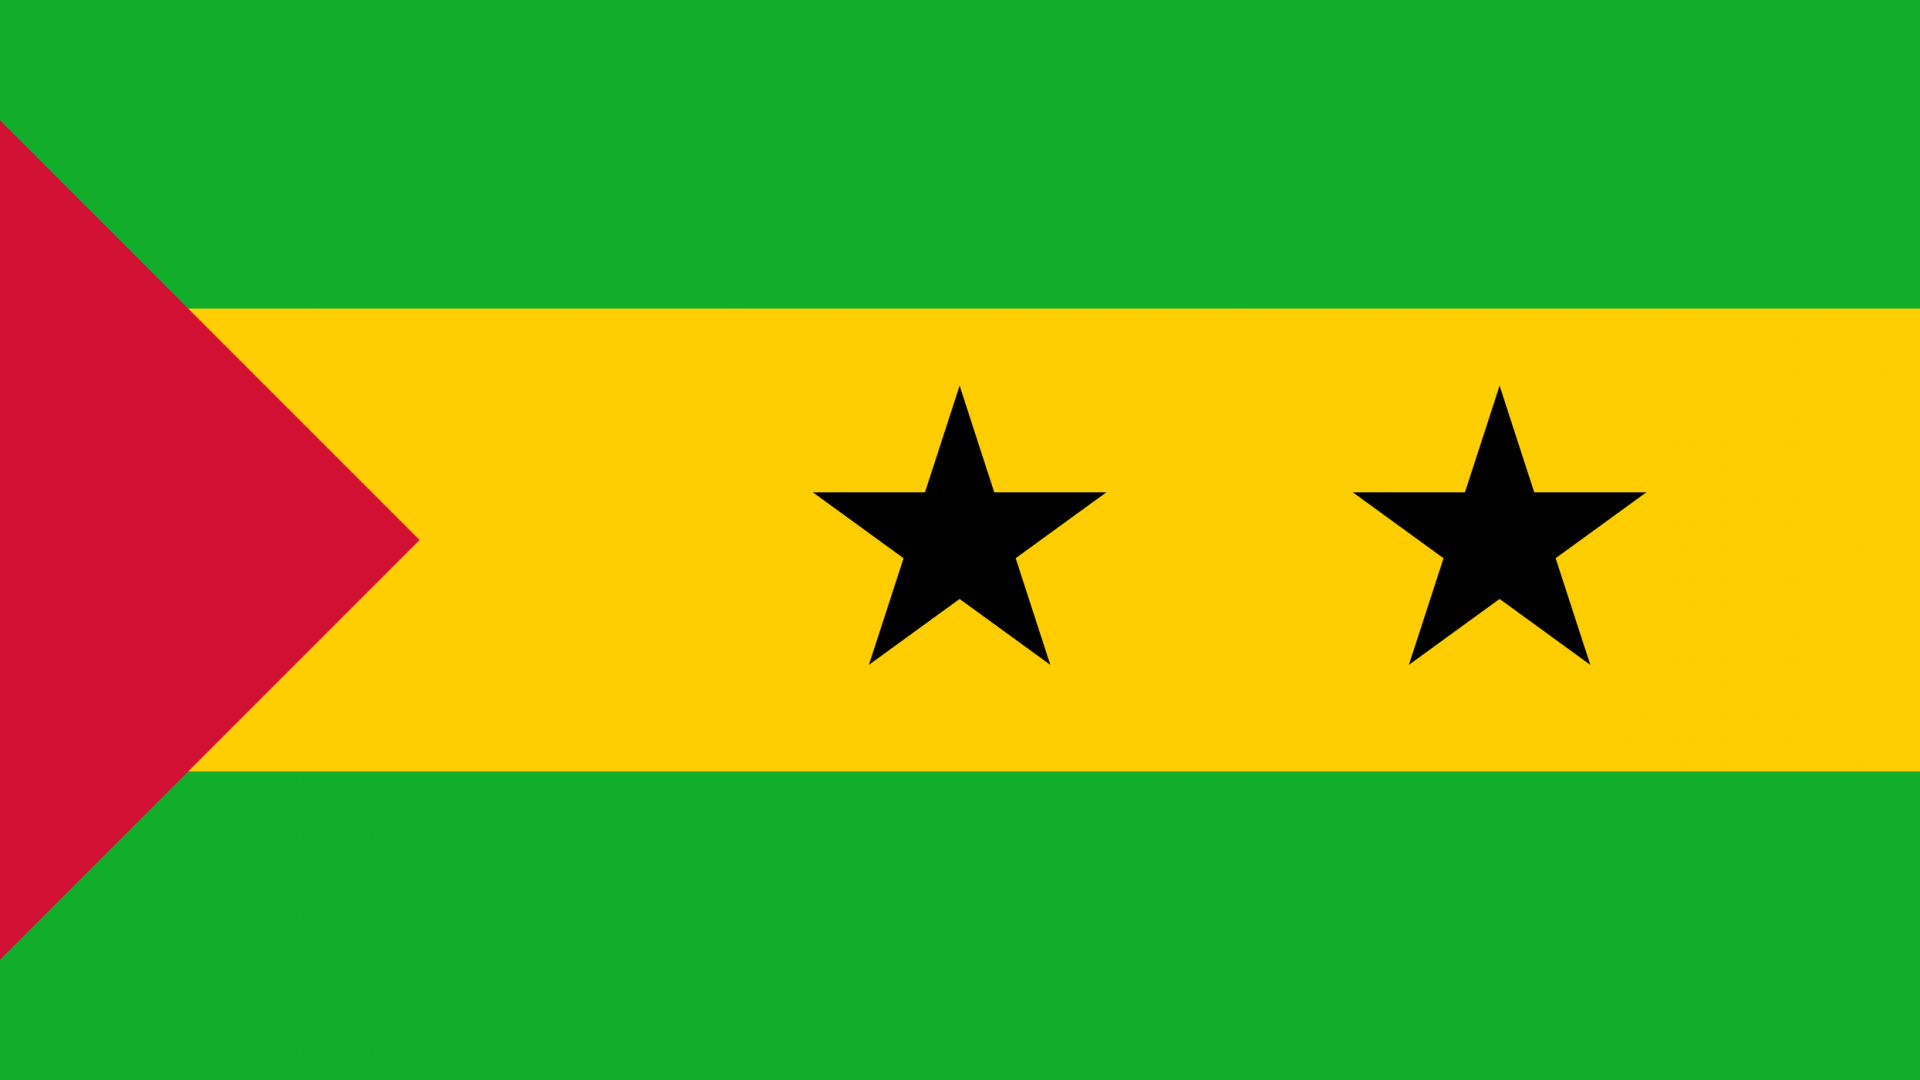 Sao Tome and Principe Flag Wallpaper High Definition High Quality